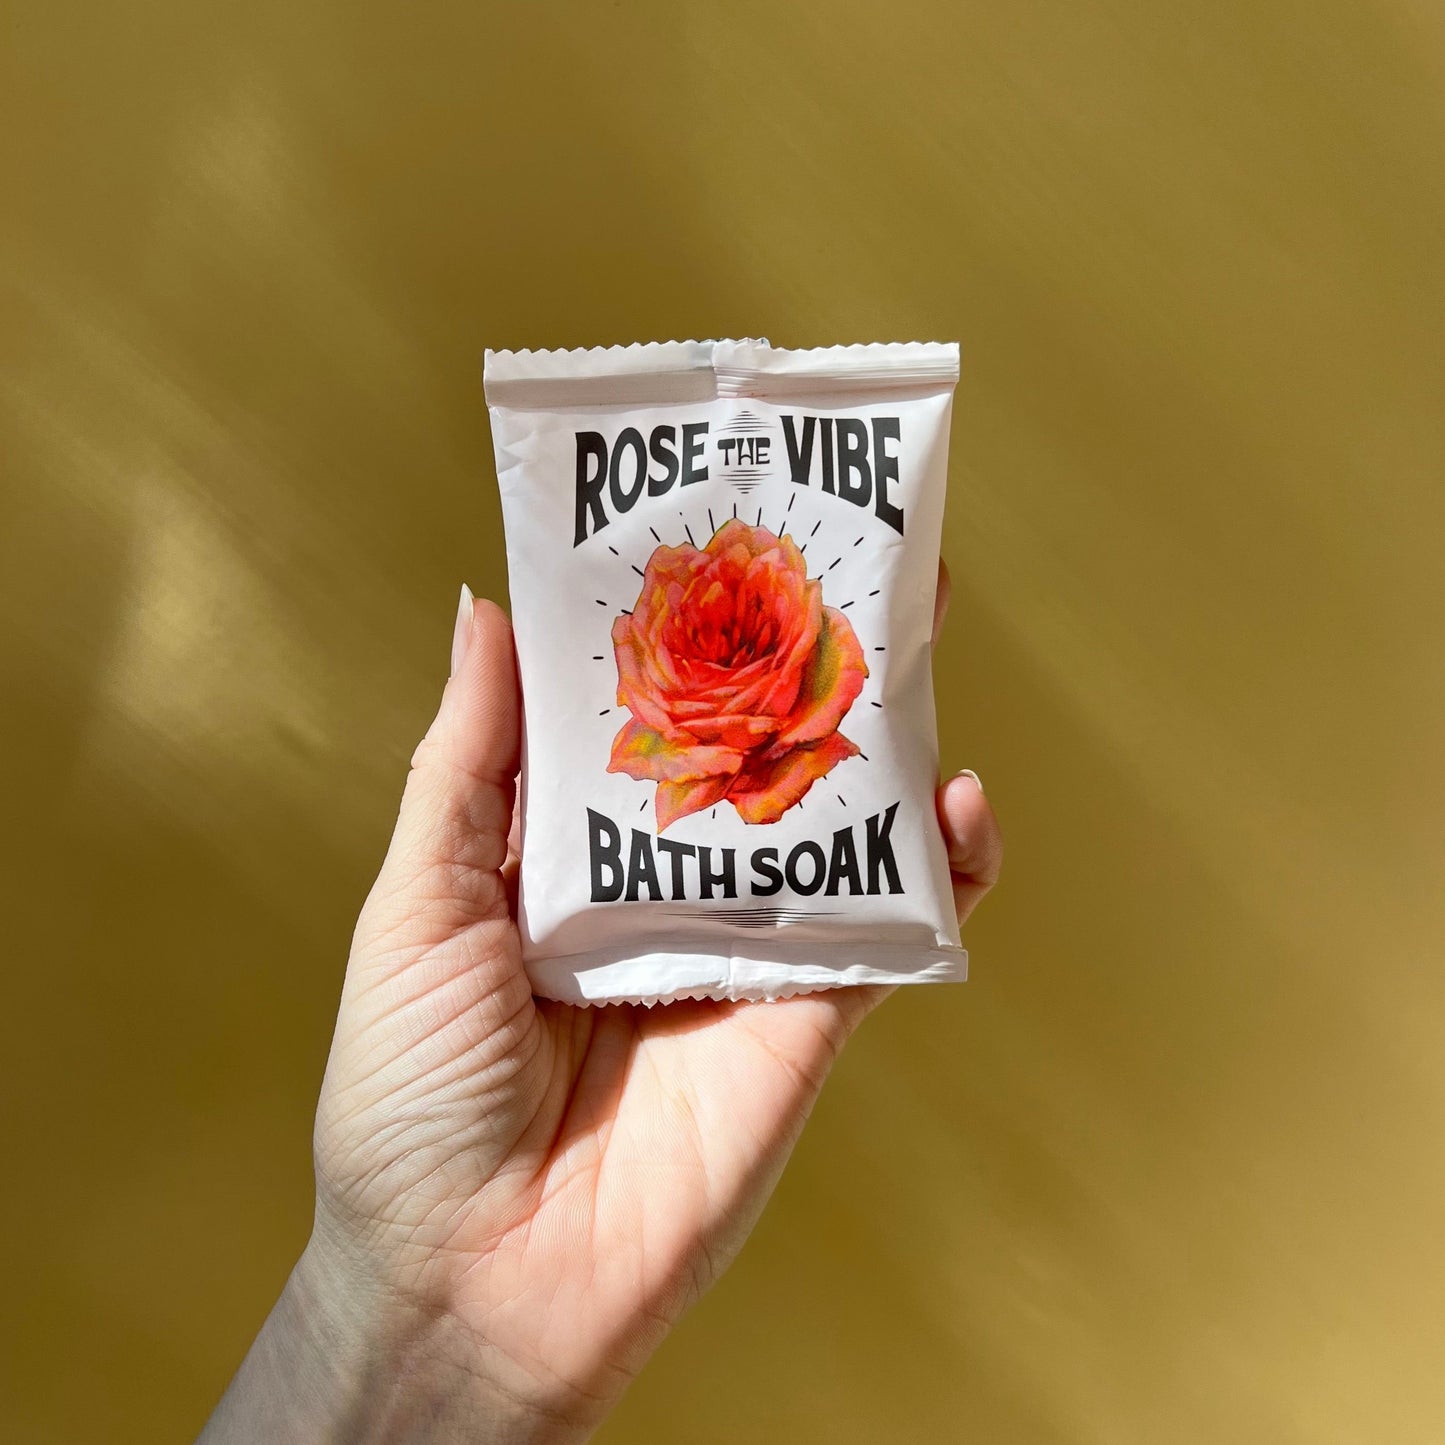 wild yonder / bath salt soaks - rose the vibe